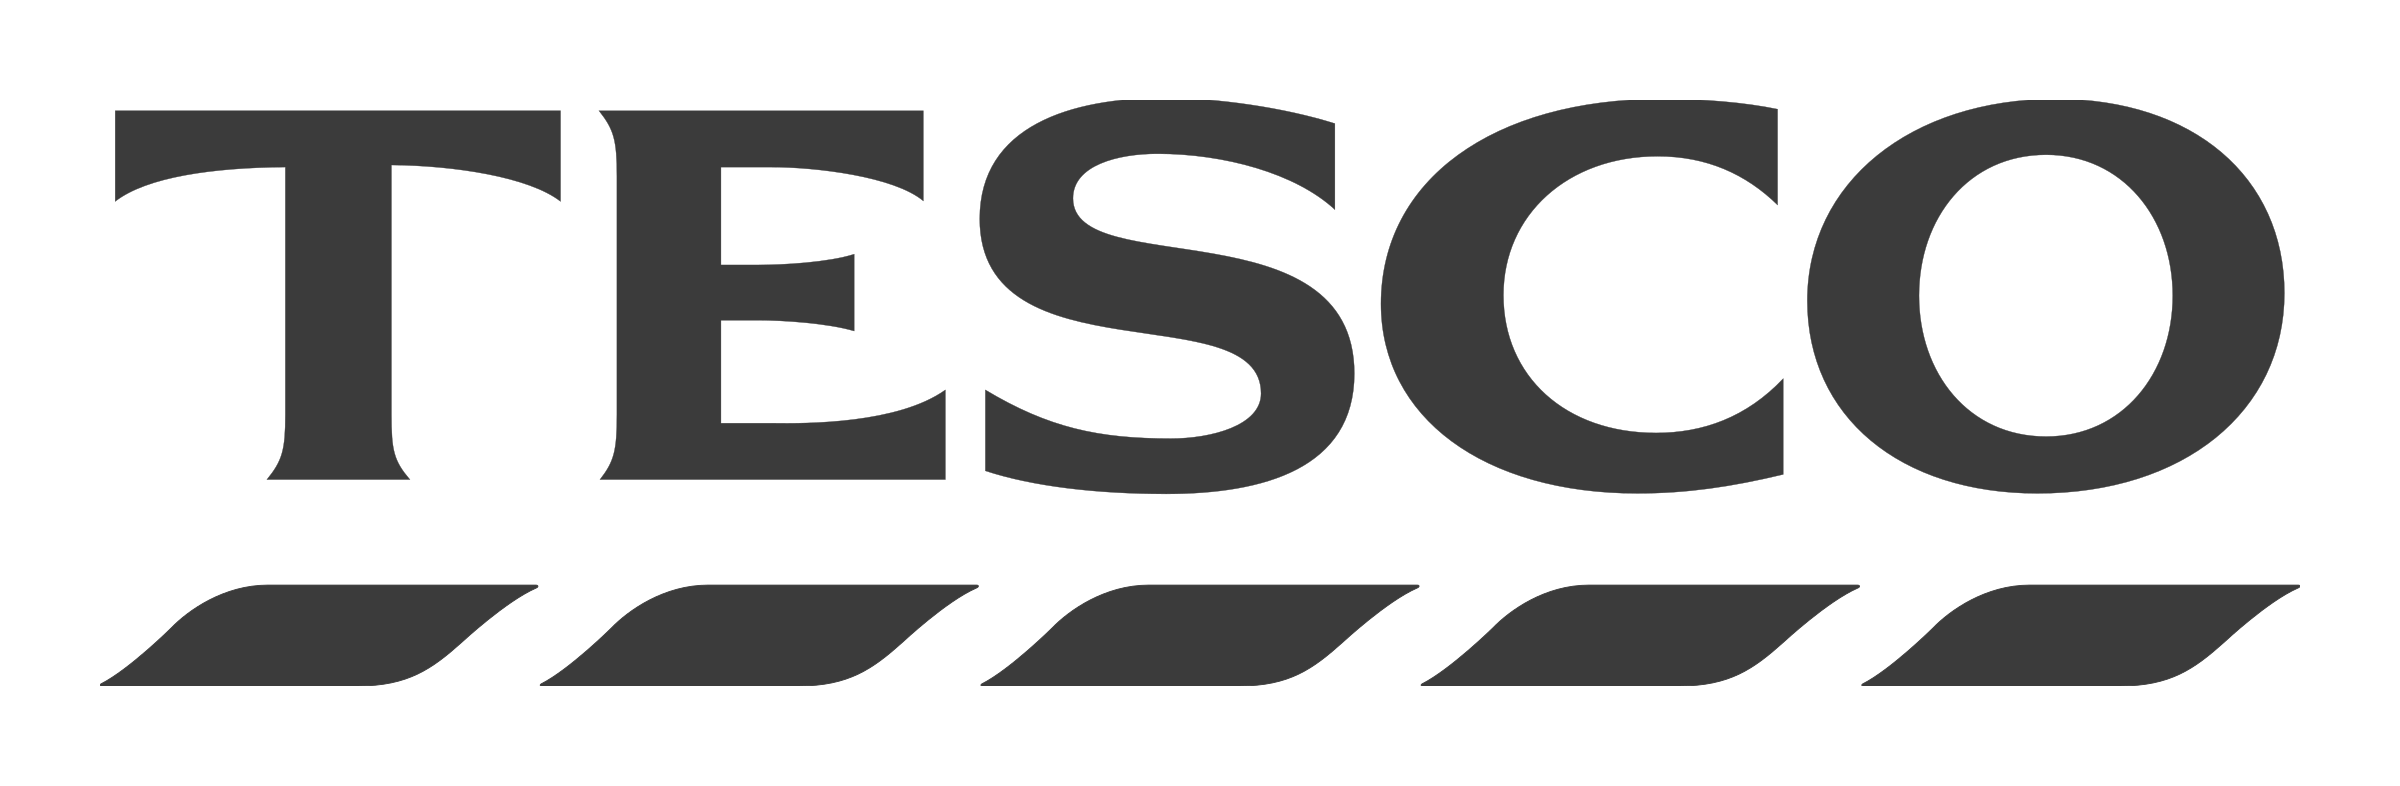 Text logo for Tesco supermarket